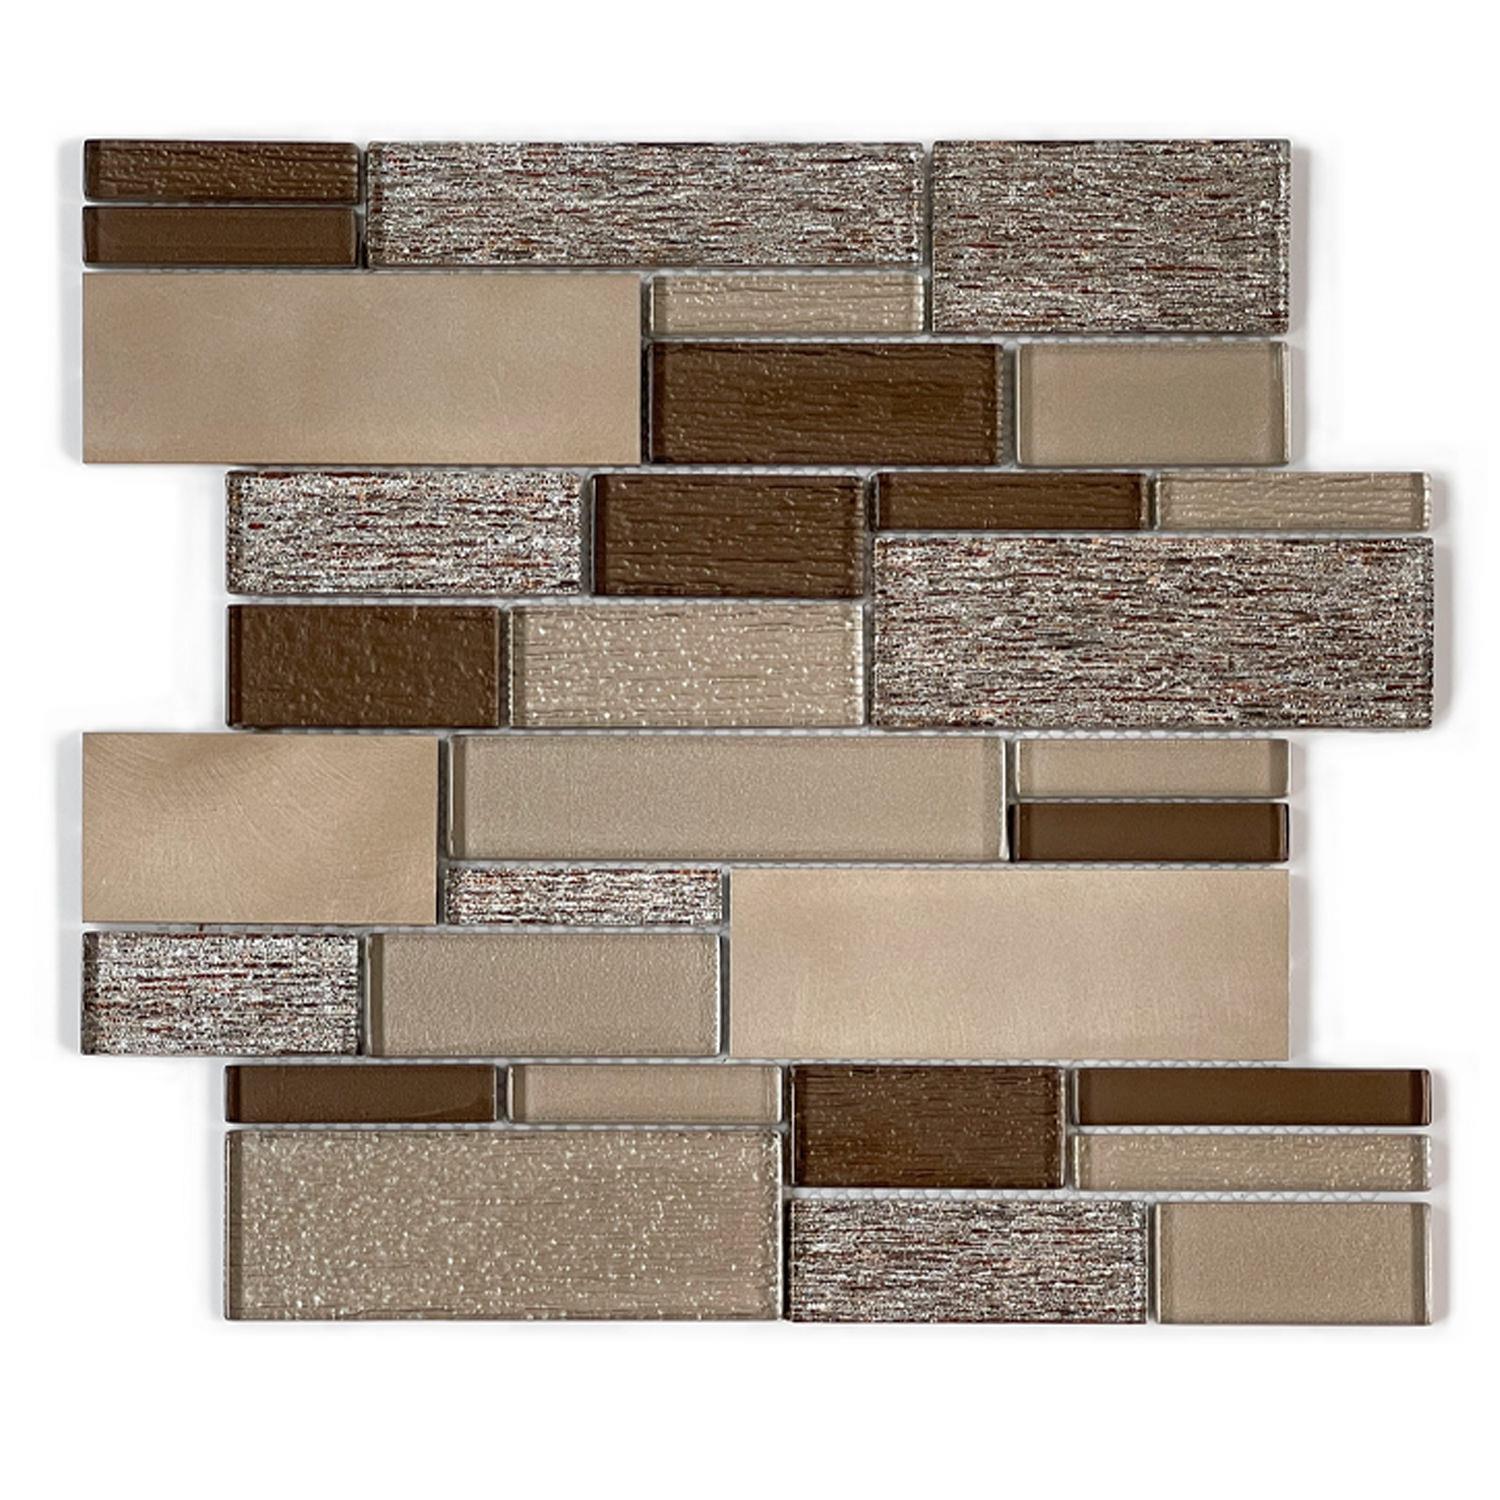 3-8-inch-mosaic-tiles